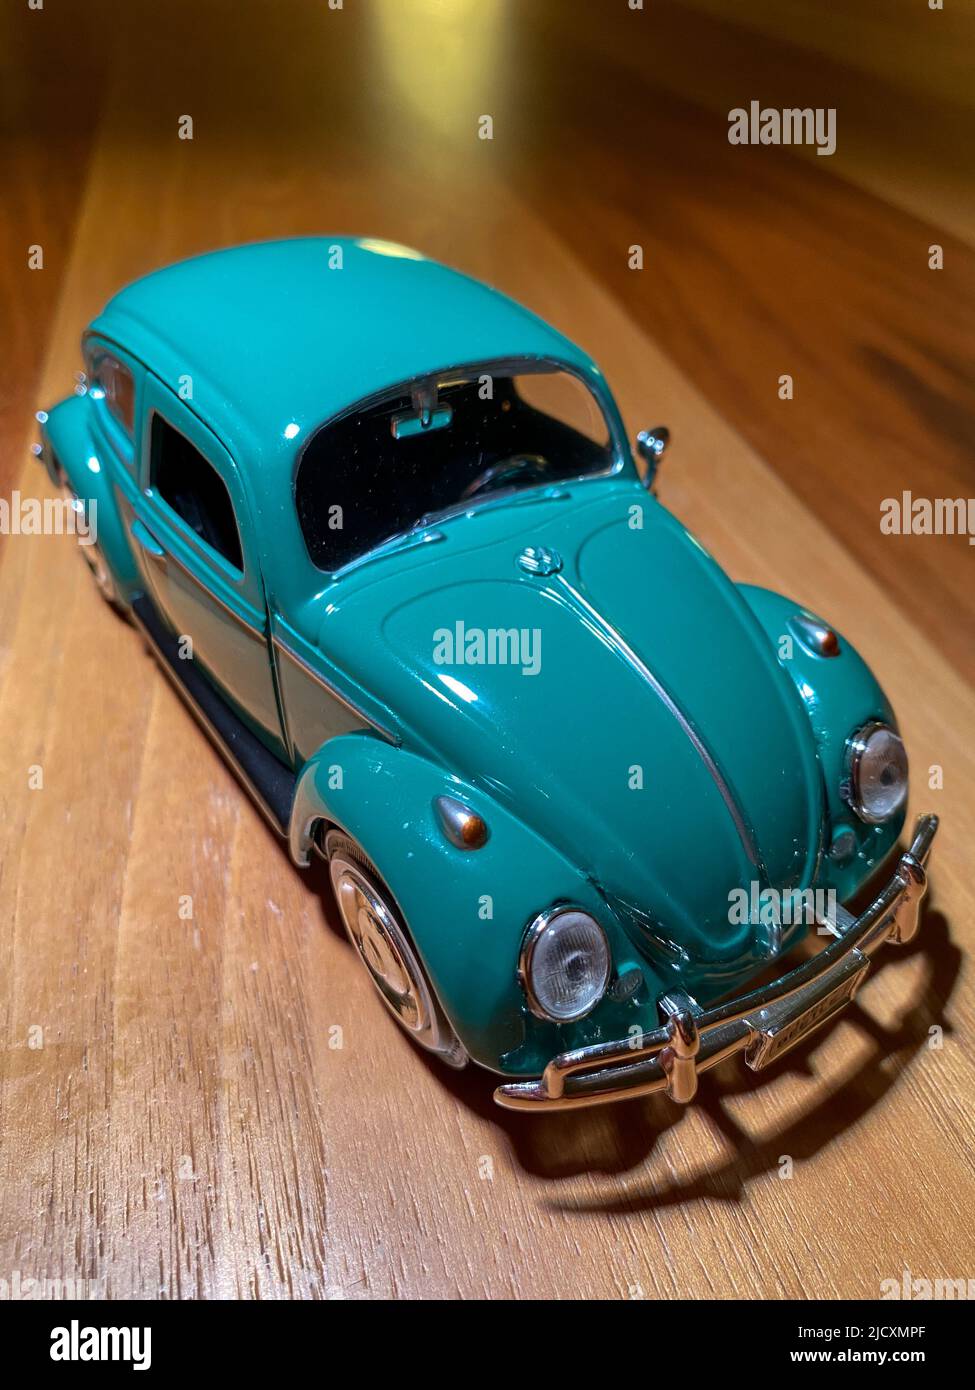 8 November 2021 Eskisehir Turkey. Vw beetle diecast model close up view Stock Photo